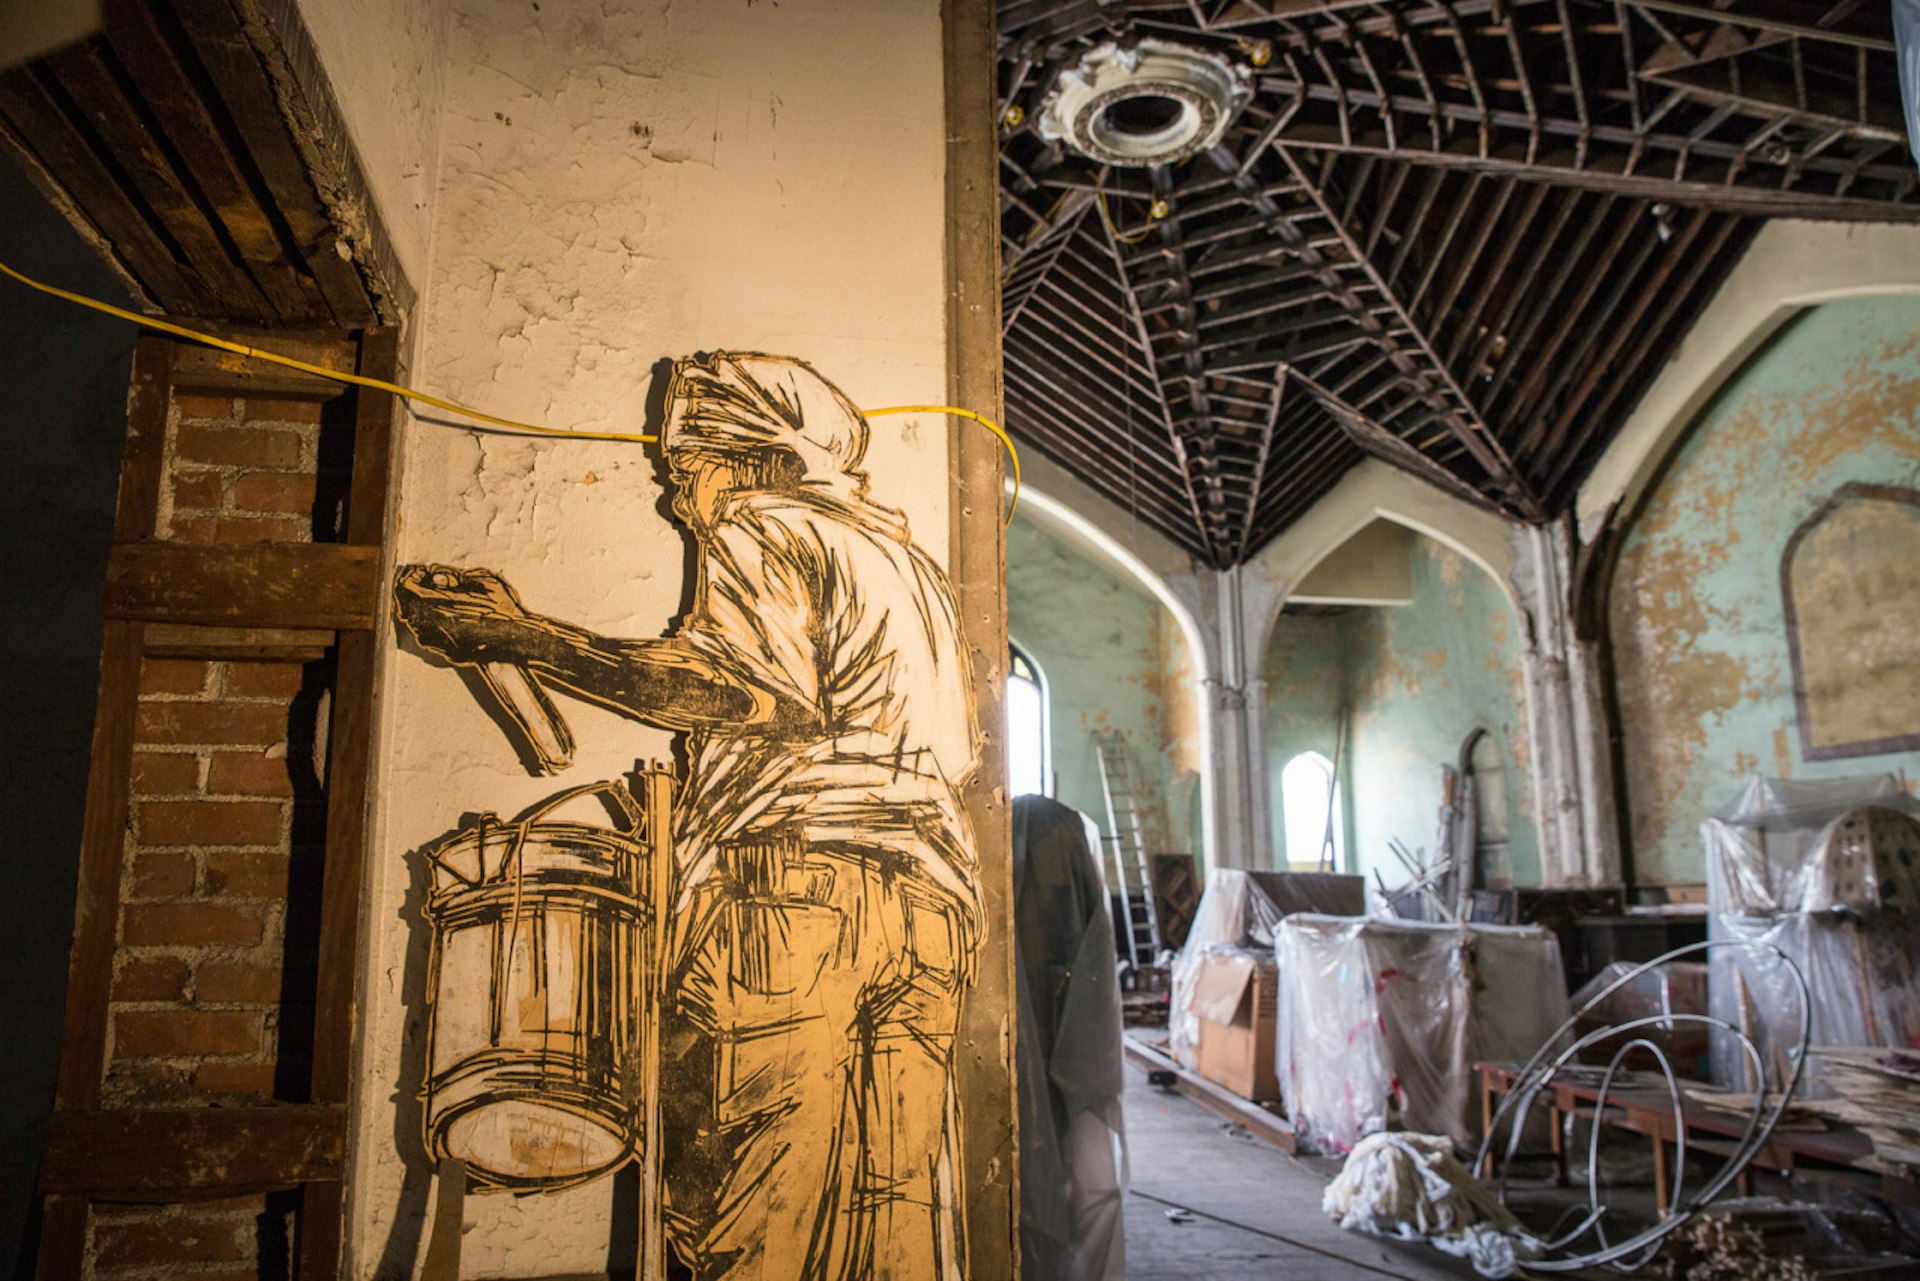 Street artist Swoon launching Kickstarter to renovate abandoned church